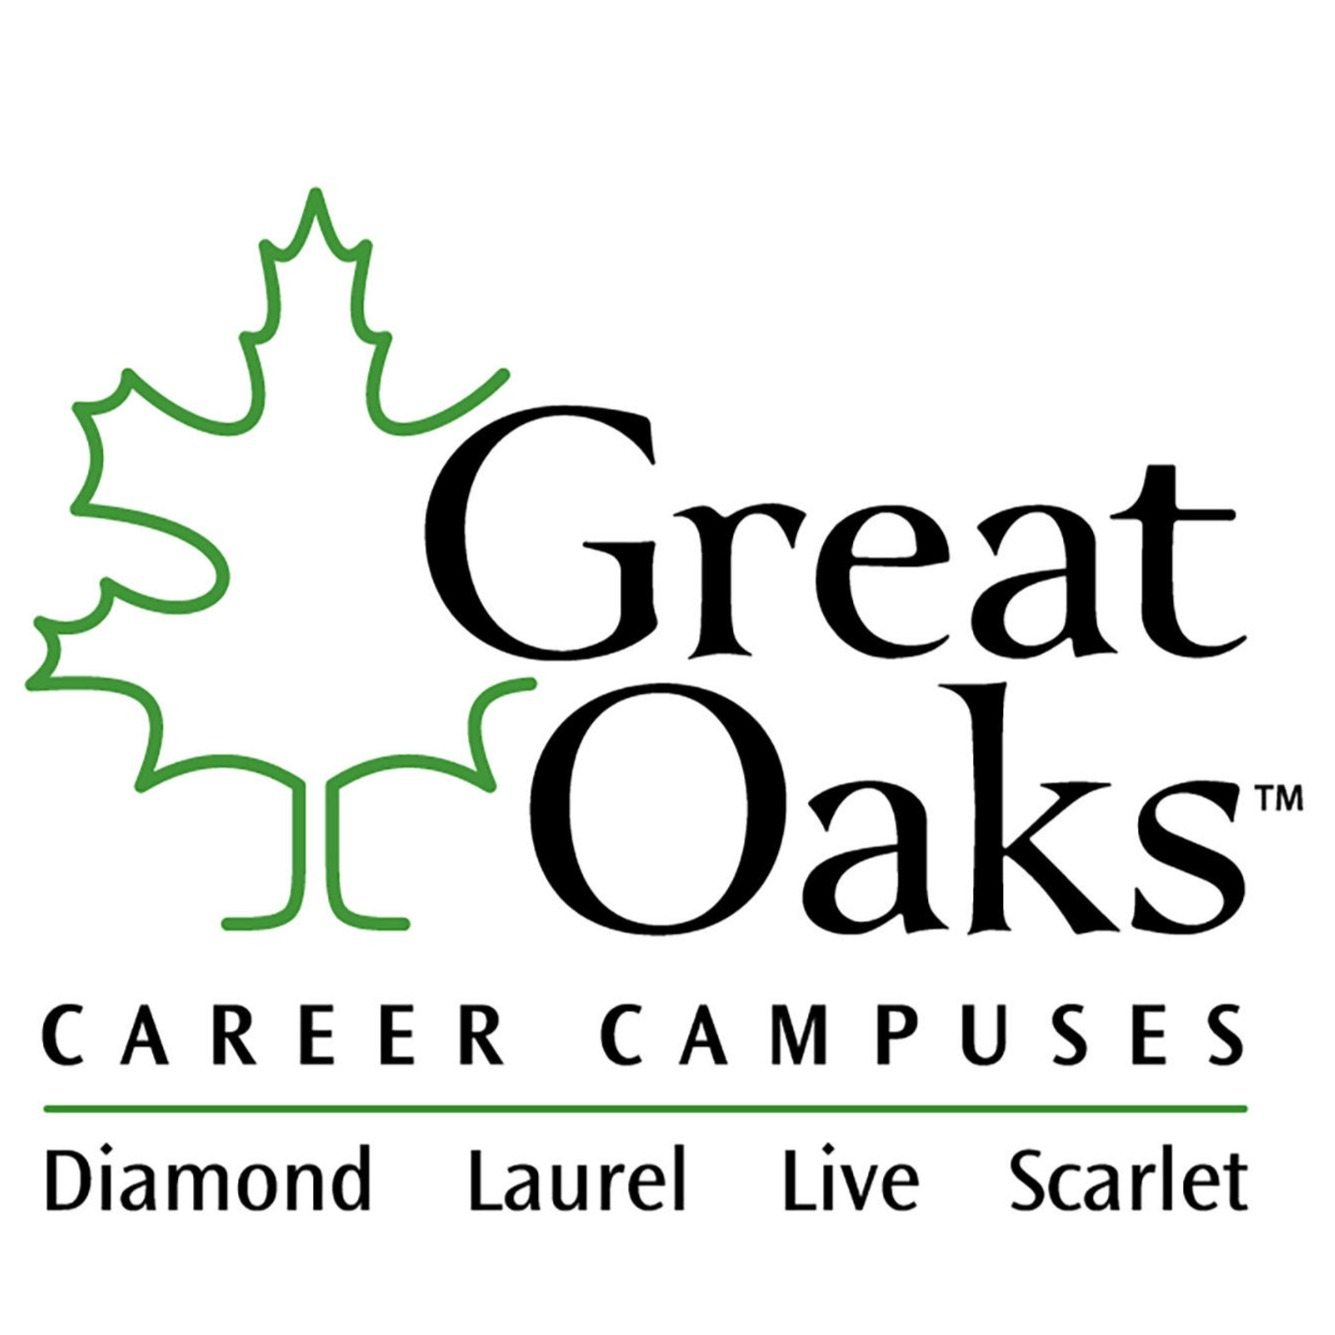 Scarlet Oaks Career Campus - Cincinnati, OH 45241 - (513)771-8810 | ShowMeLocal.com